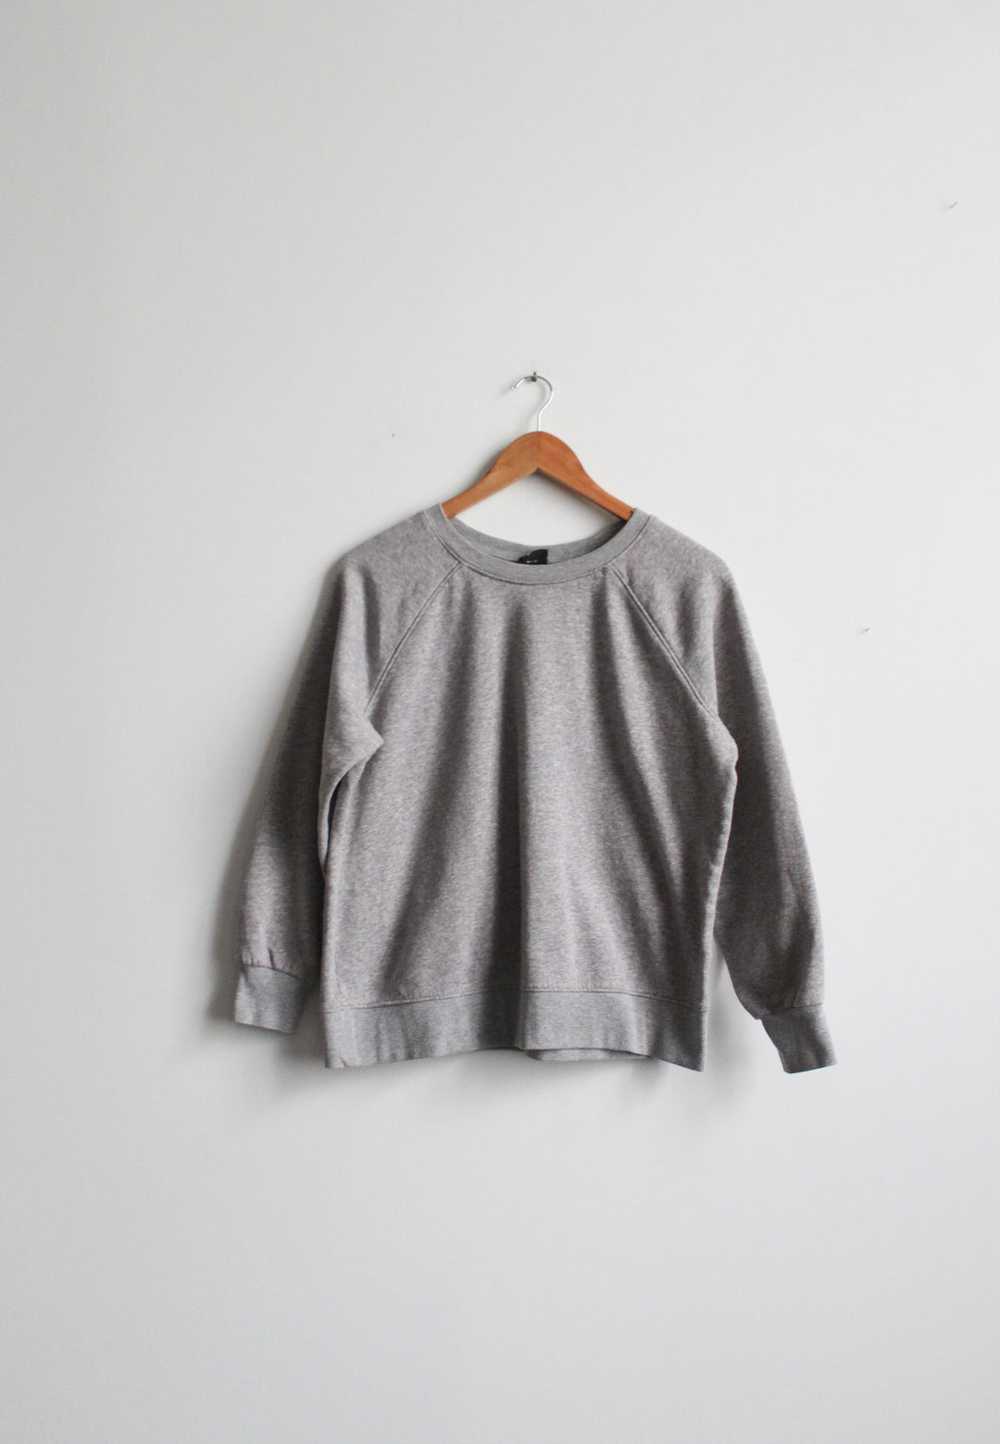 atheltic gray sweatshirt - image 4